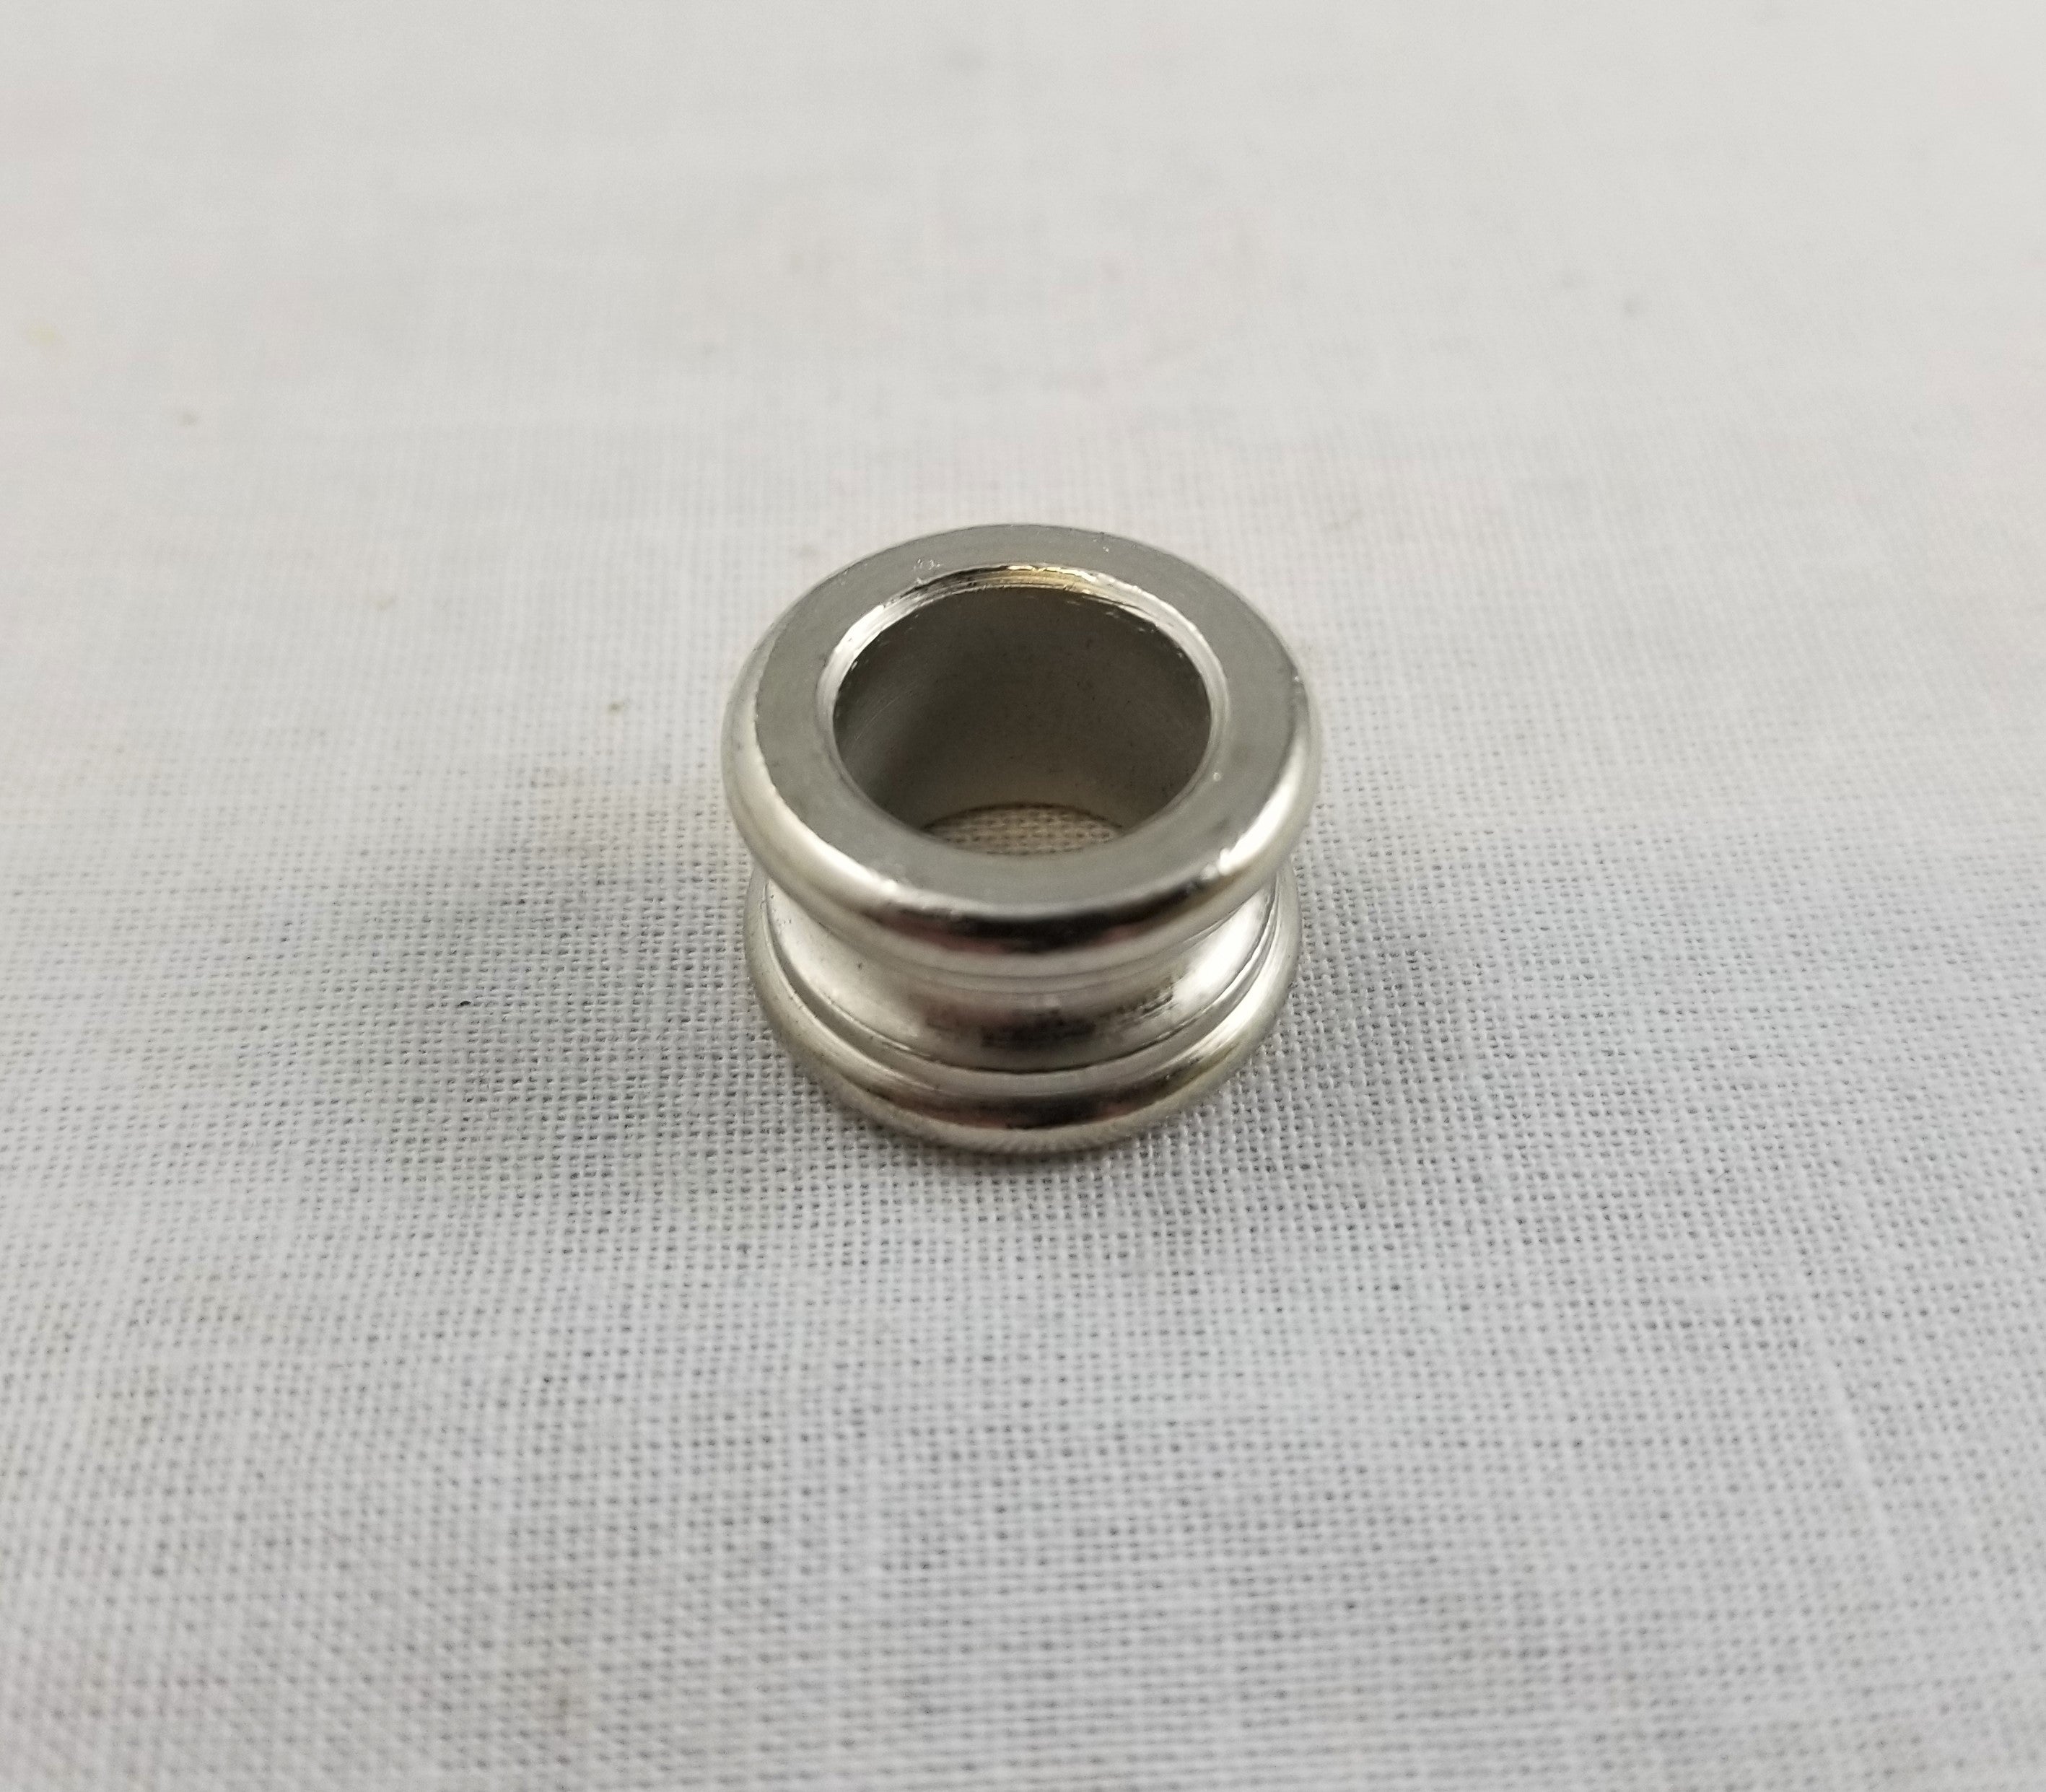 Turned Brass Neck - Slip 1/8 IP - Nickel Plated  3/8" tall, 5/8" diameter